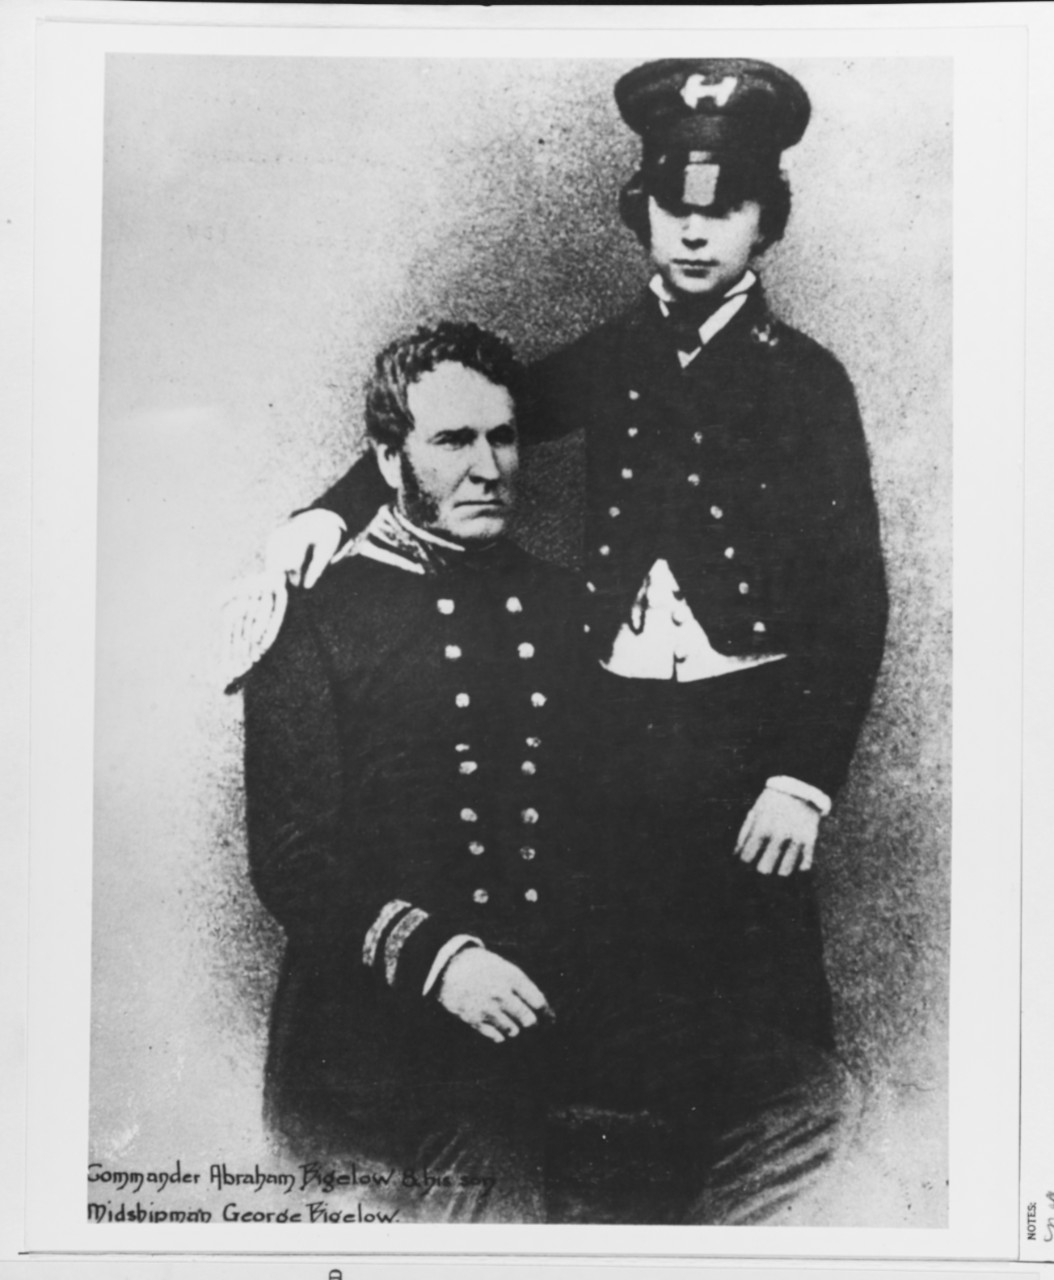 Commander Abraham Bigelow and Midshipman George A. Bigelow